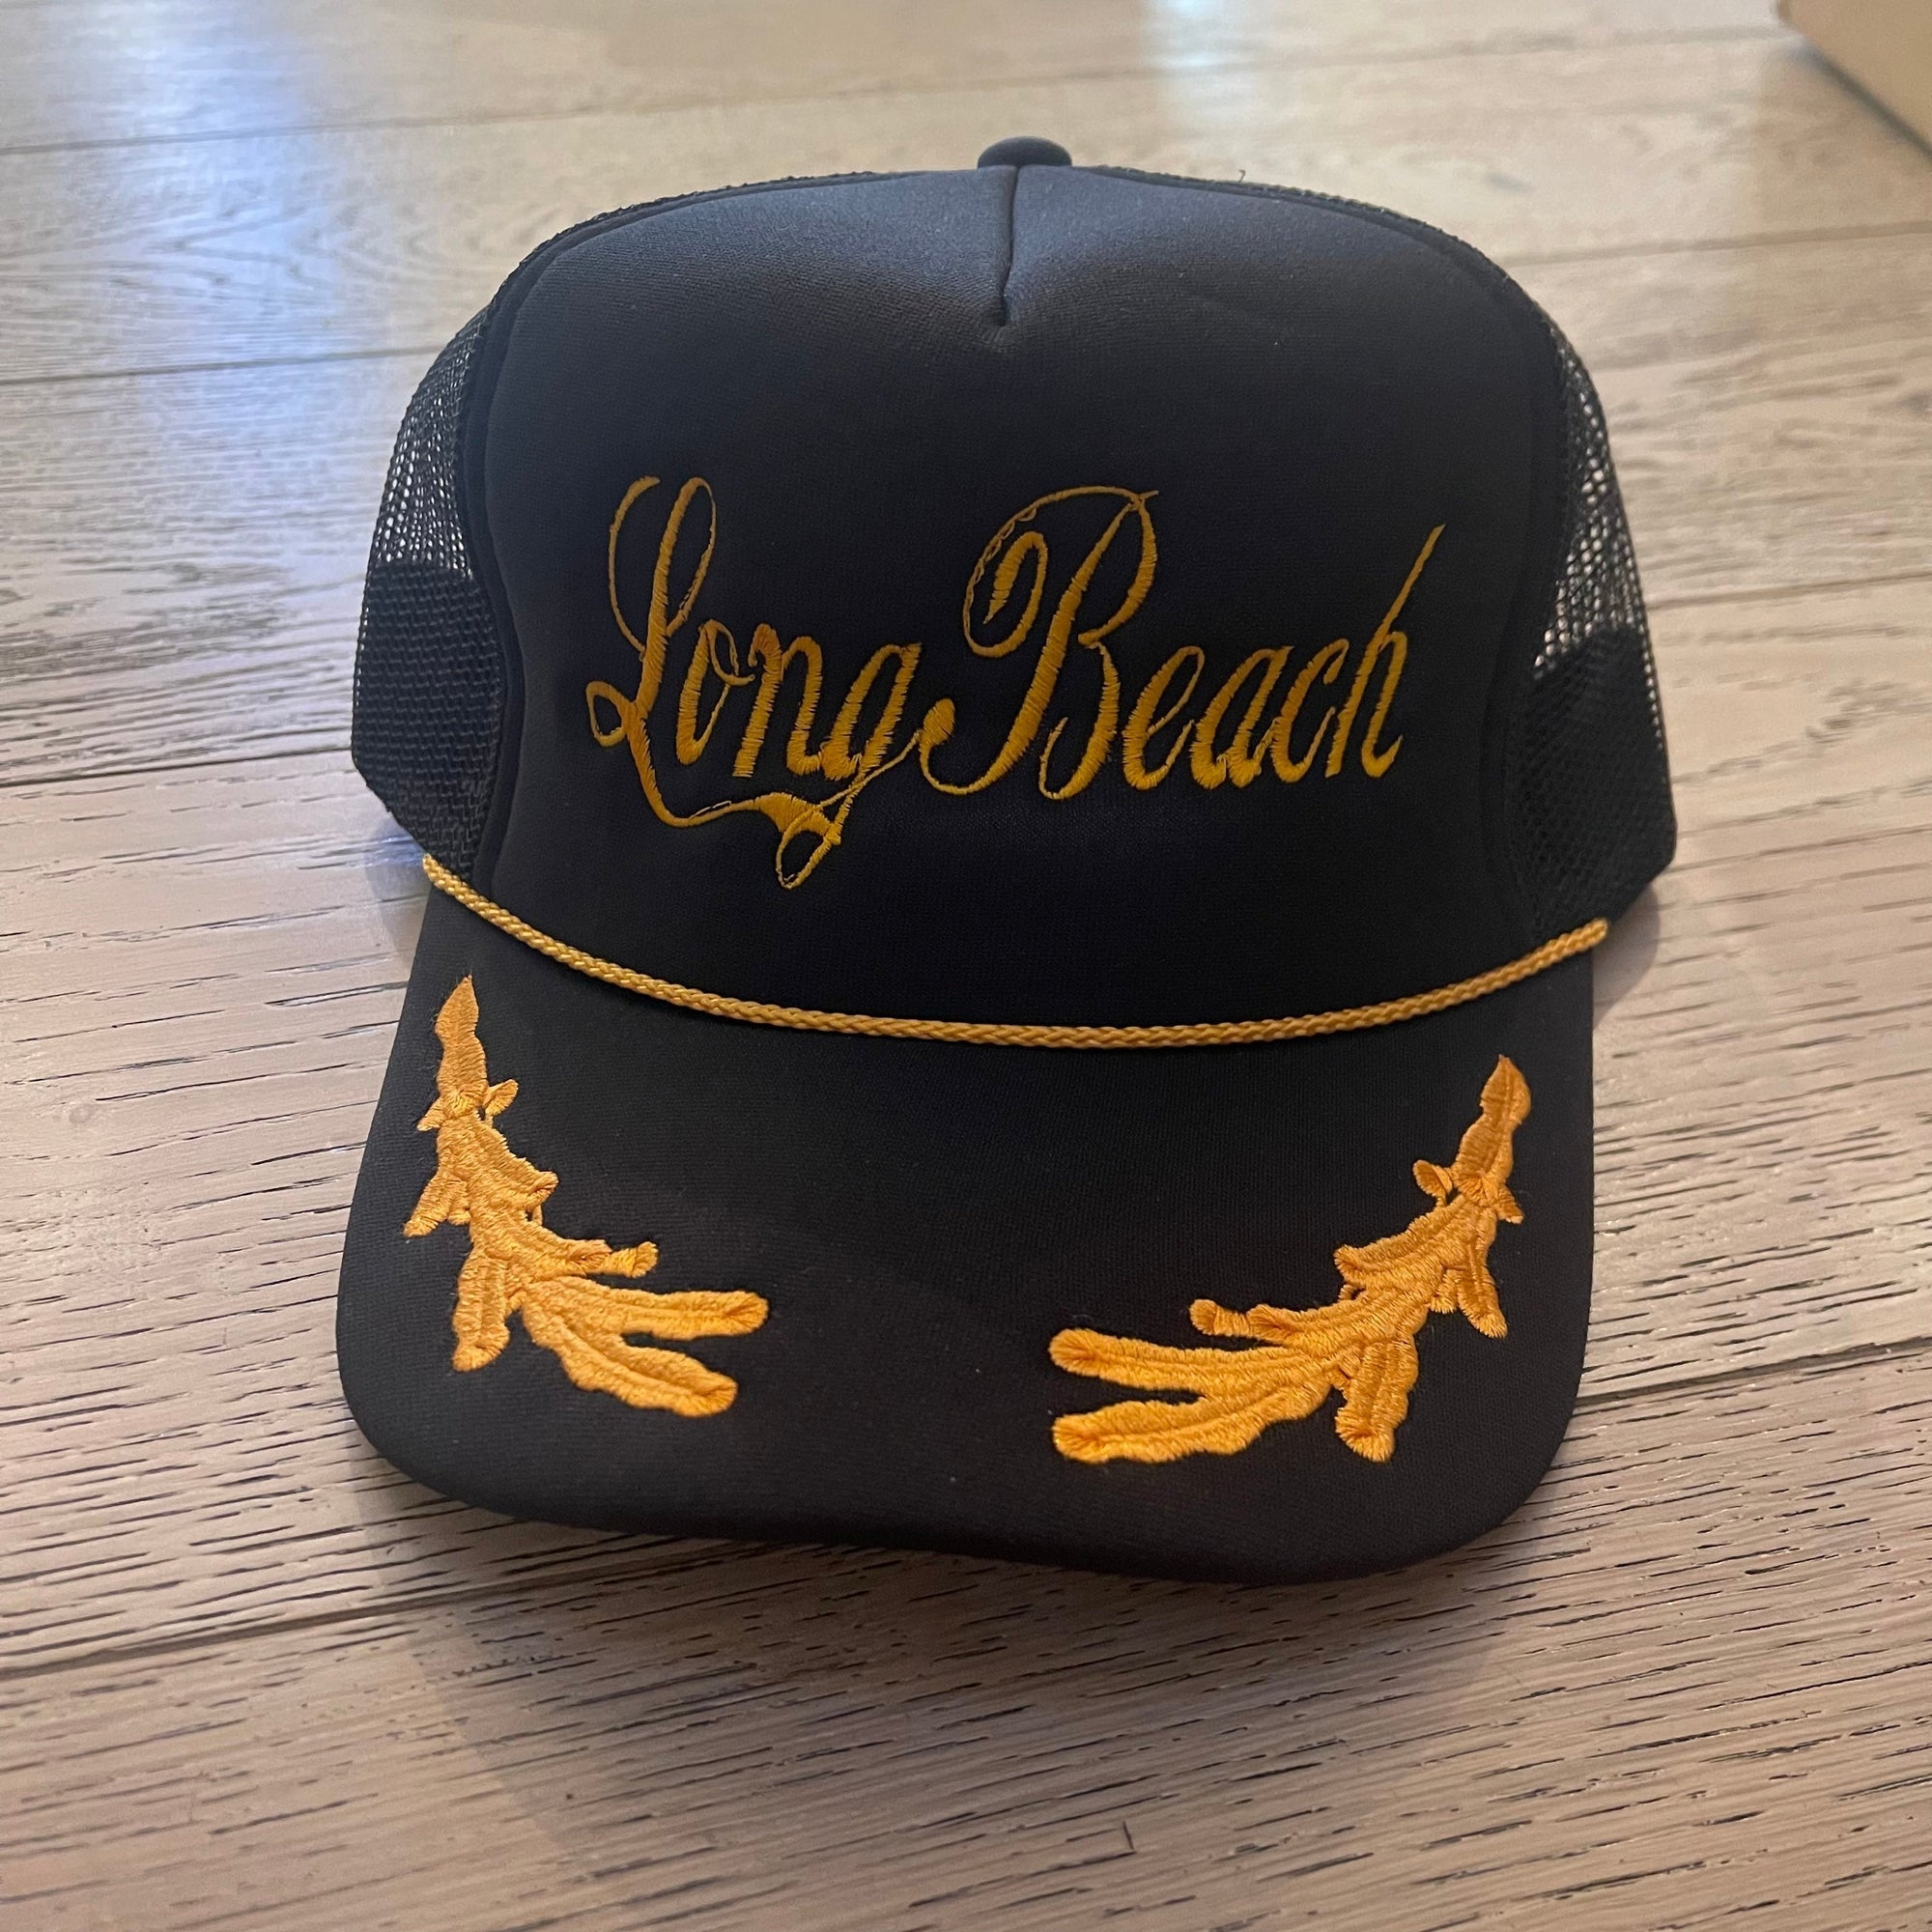 "long beach" trucker hat